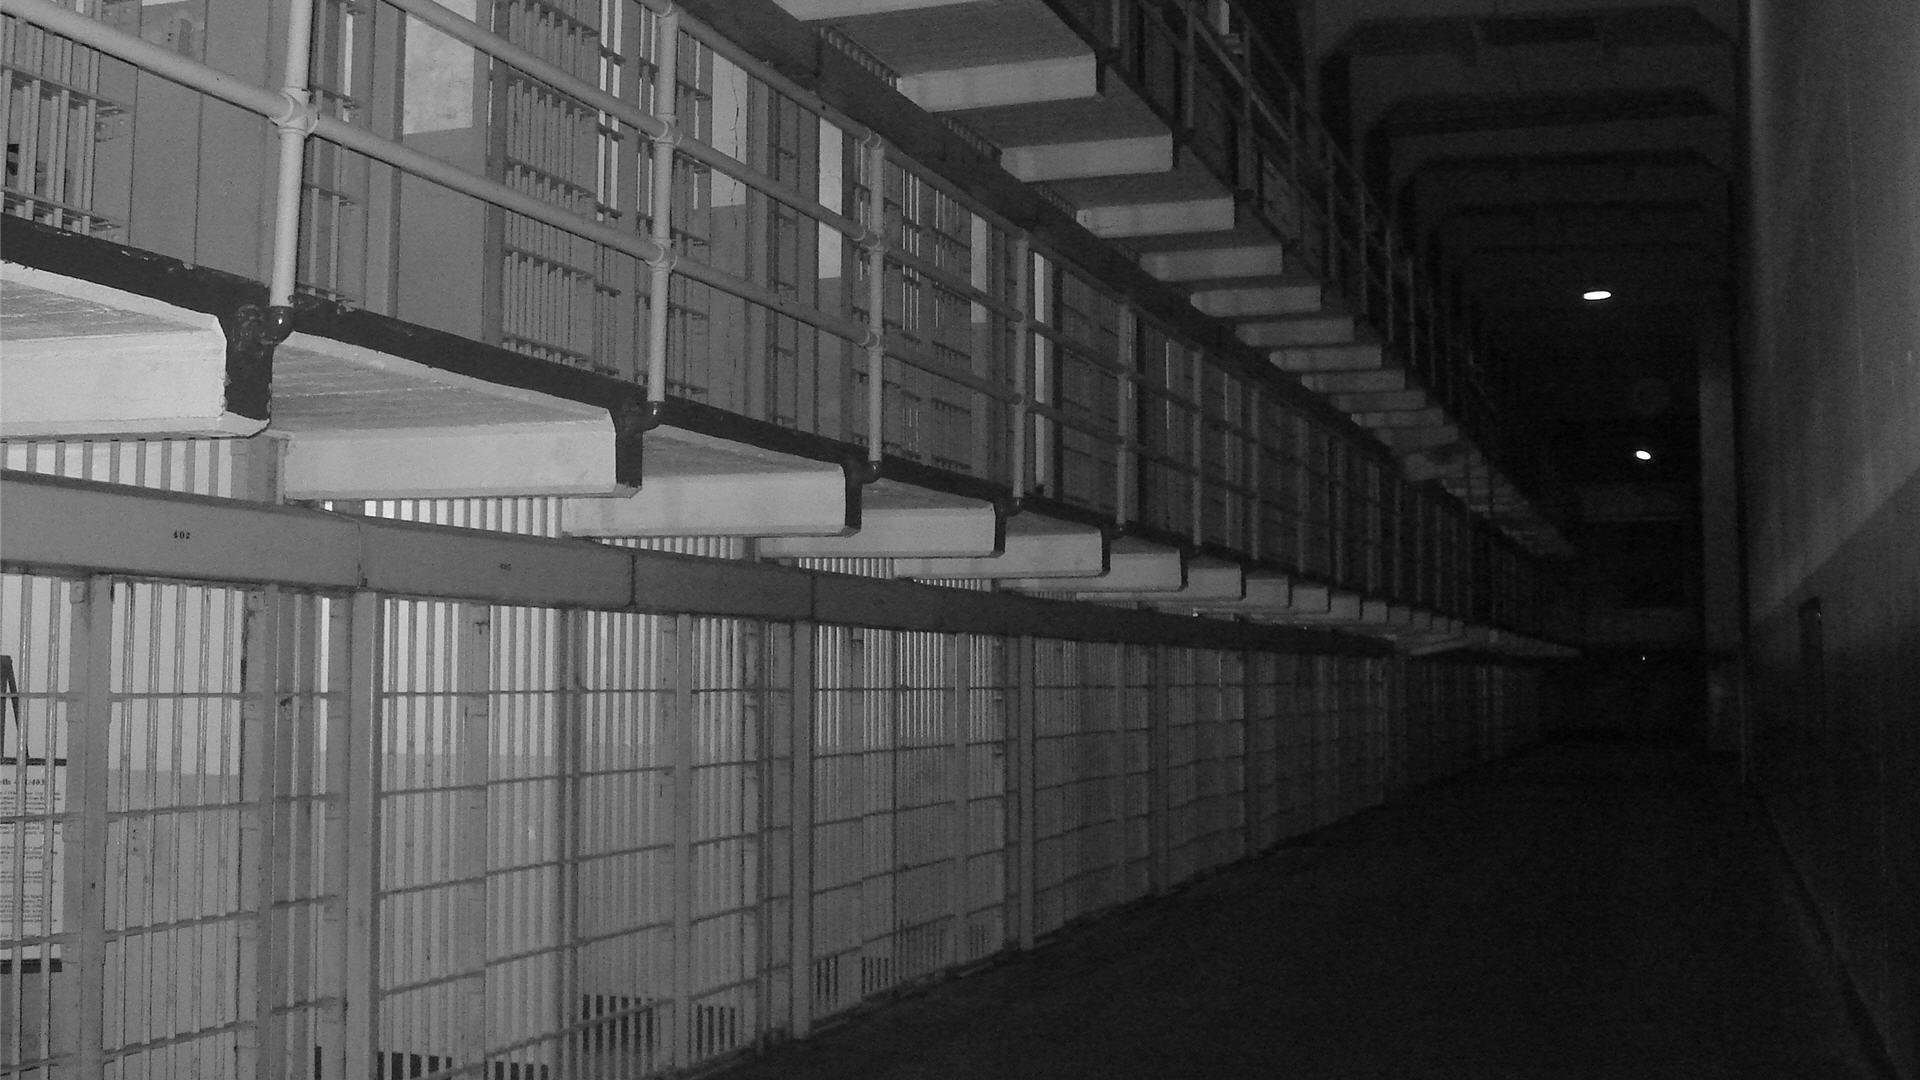 Prison Wallpaper, Prison Image Galleries